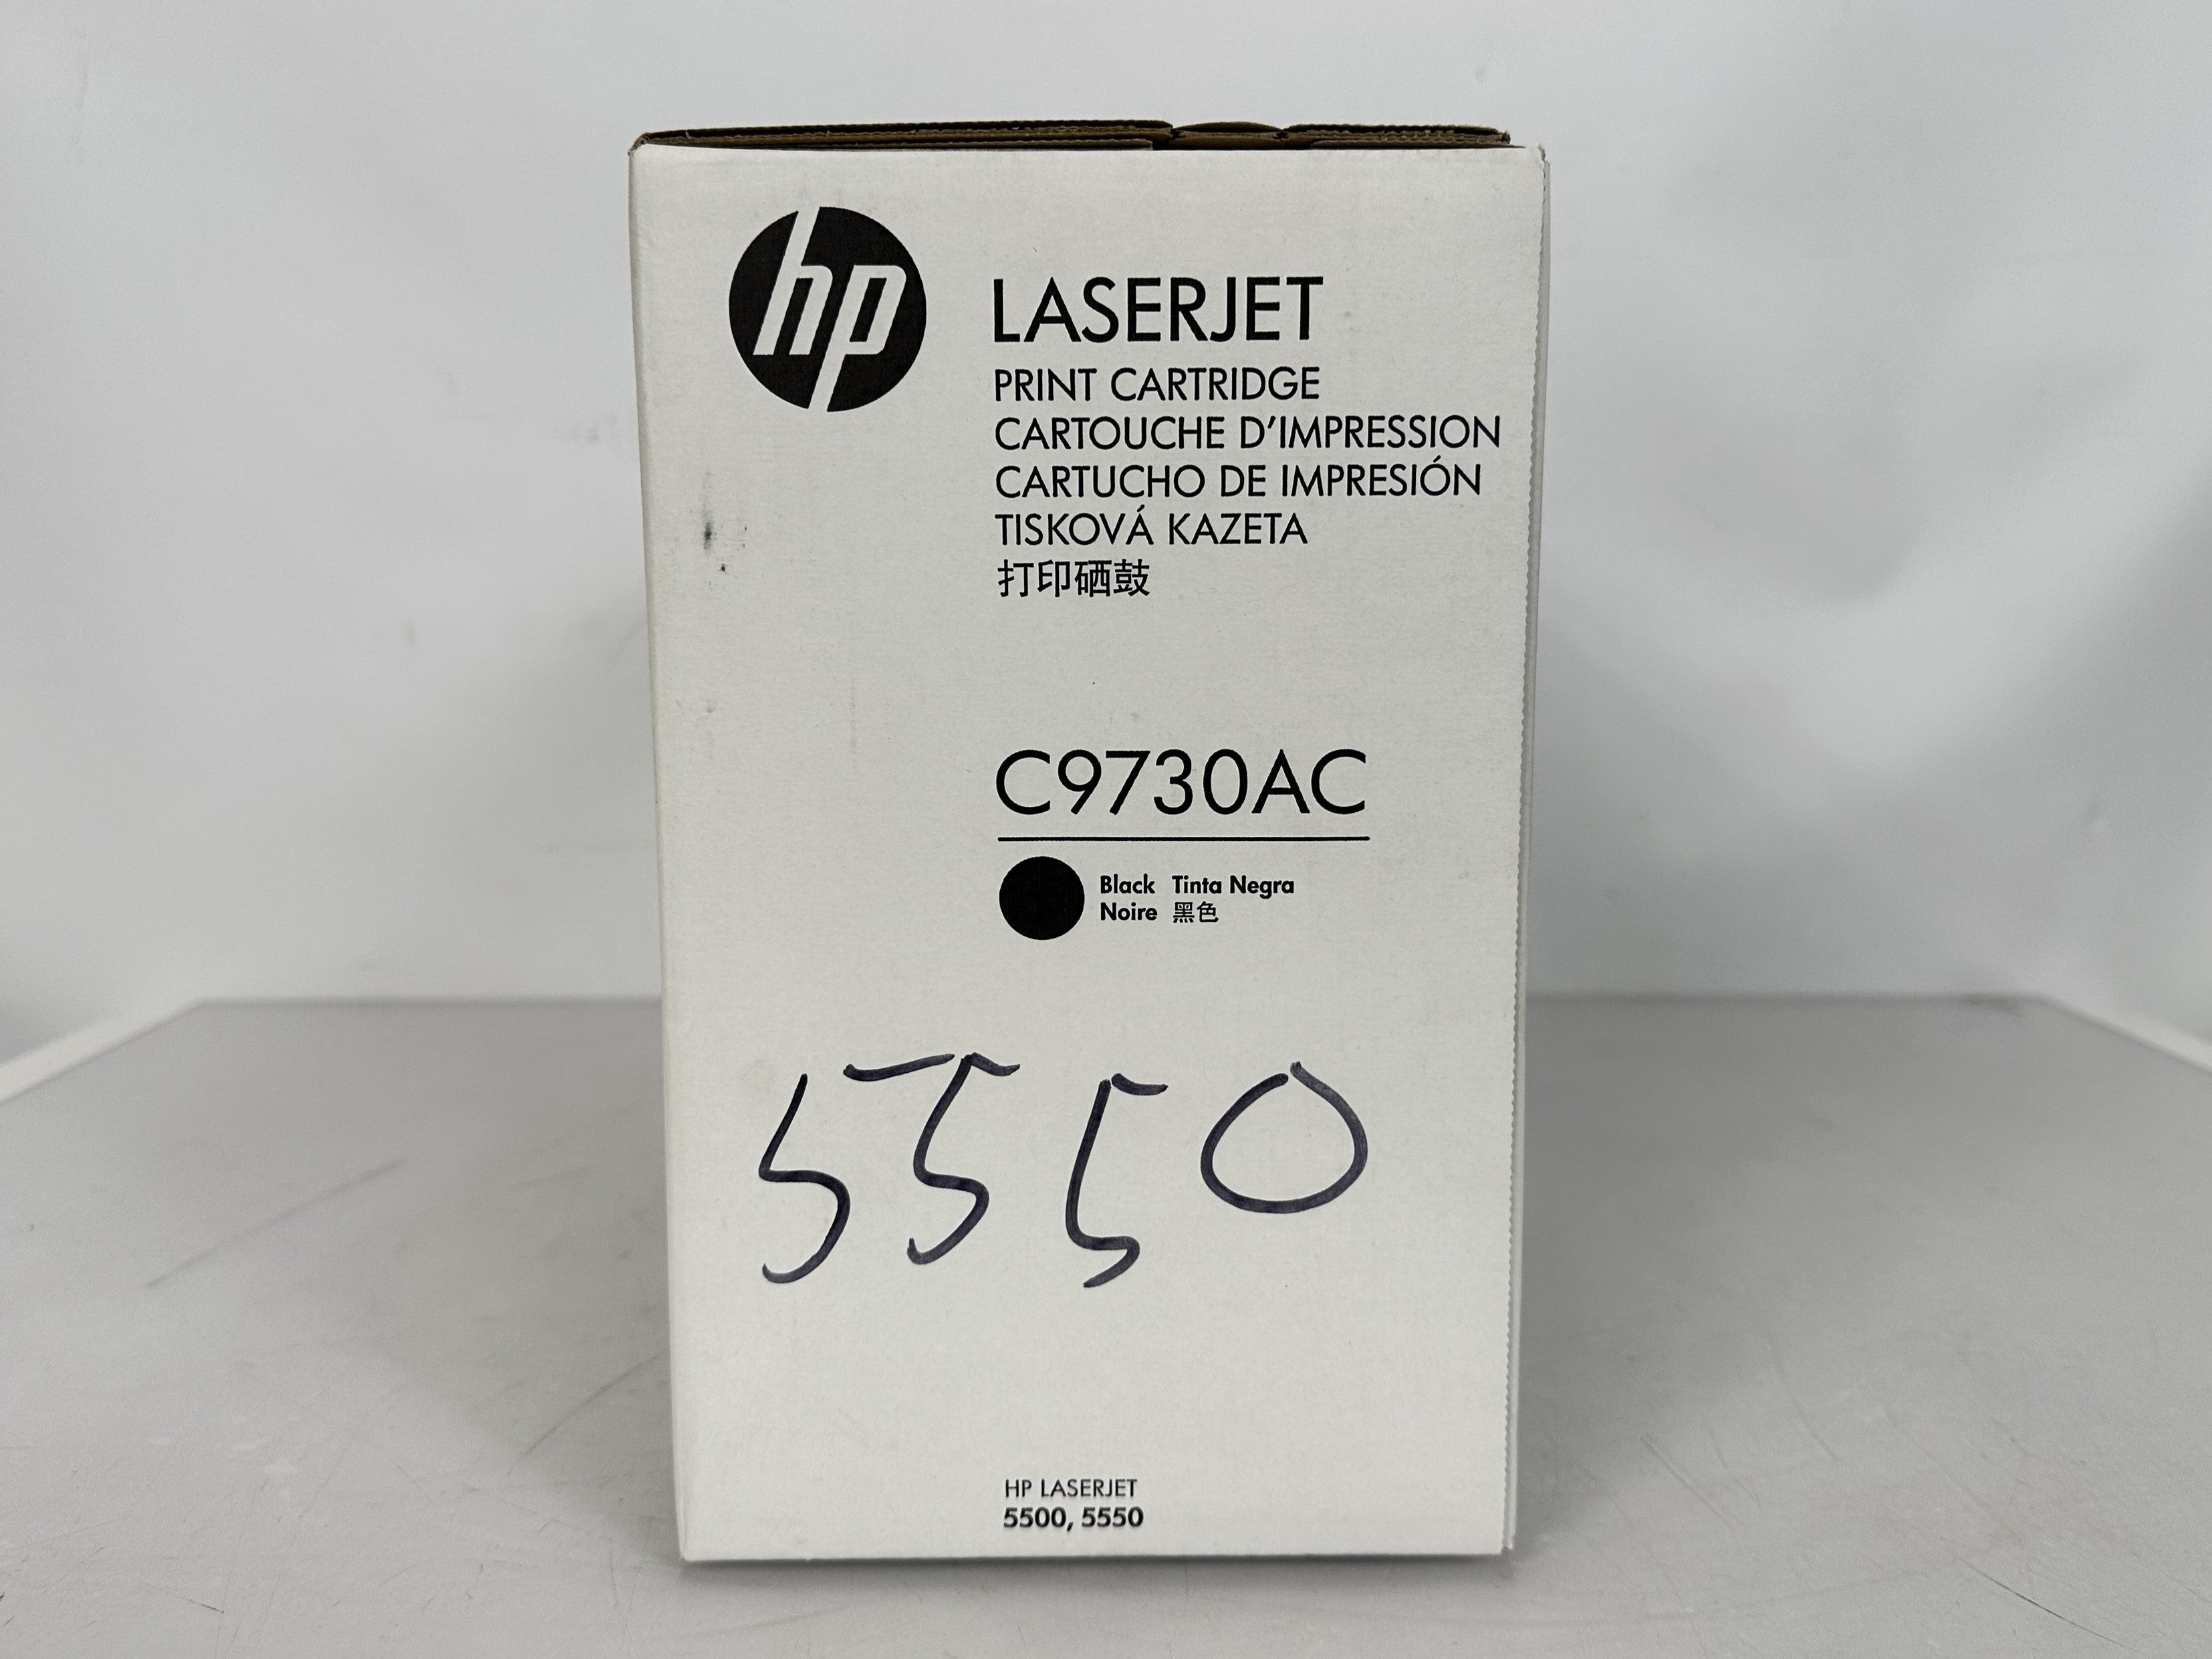 HP LaserJet C9730AC Black Toner Cartridge